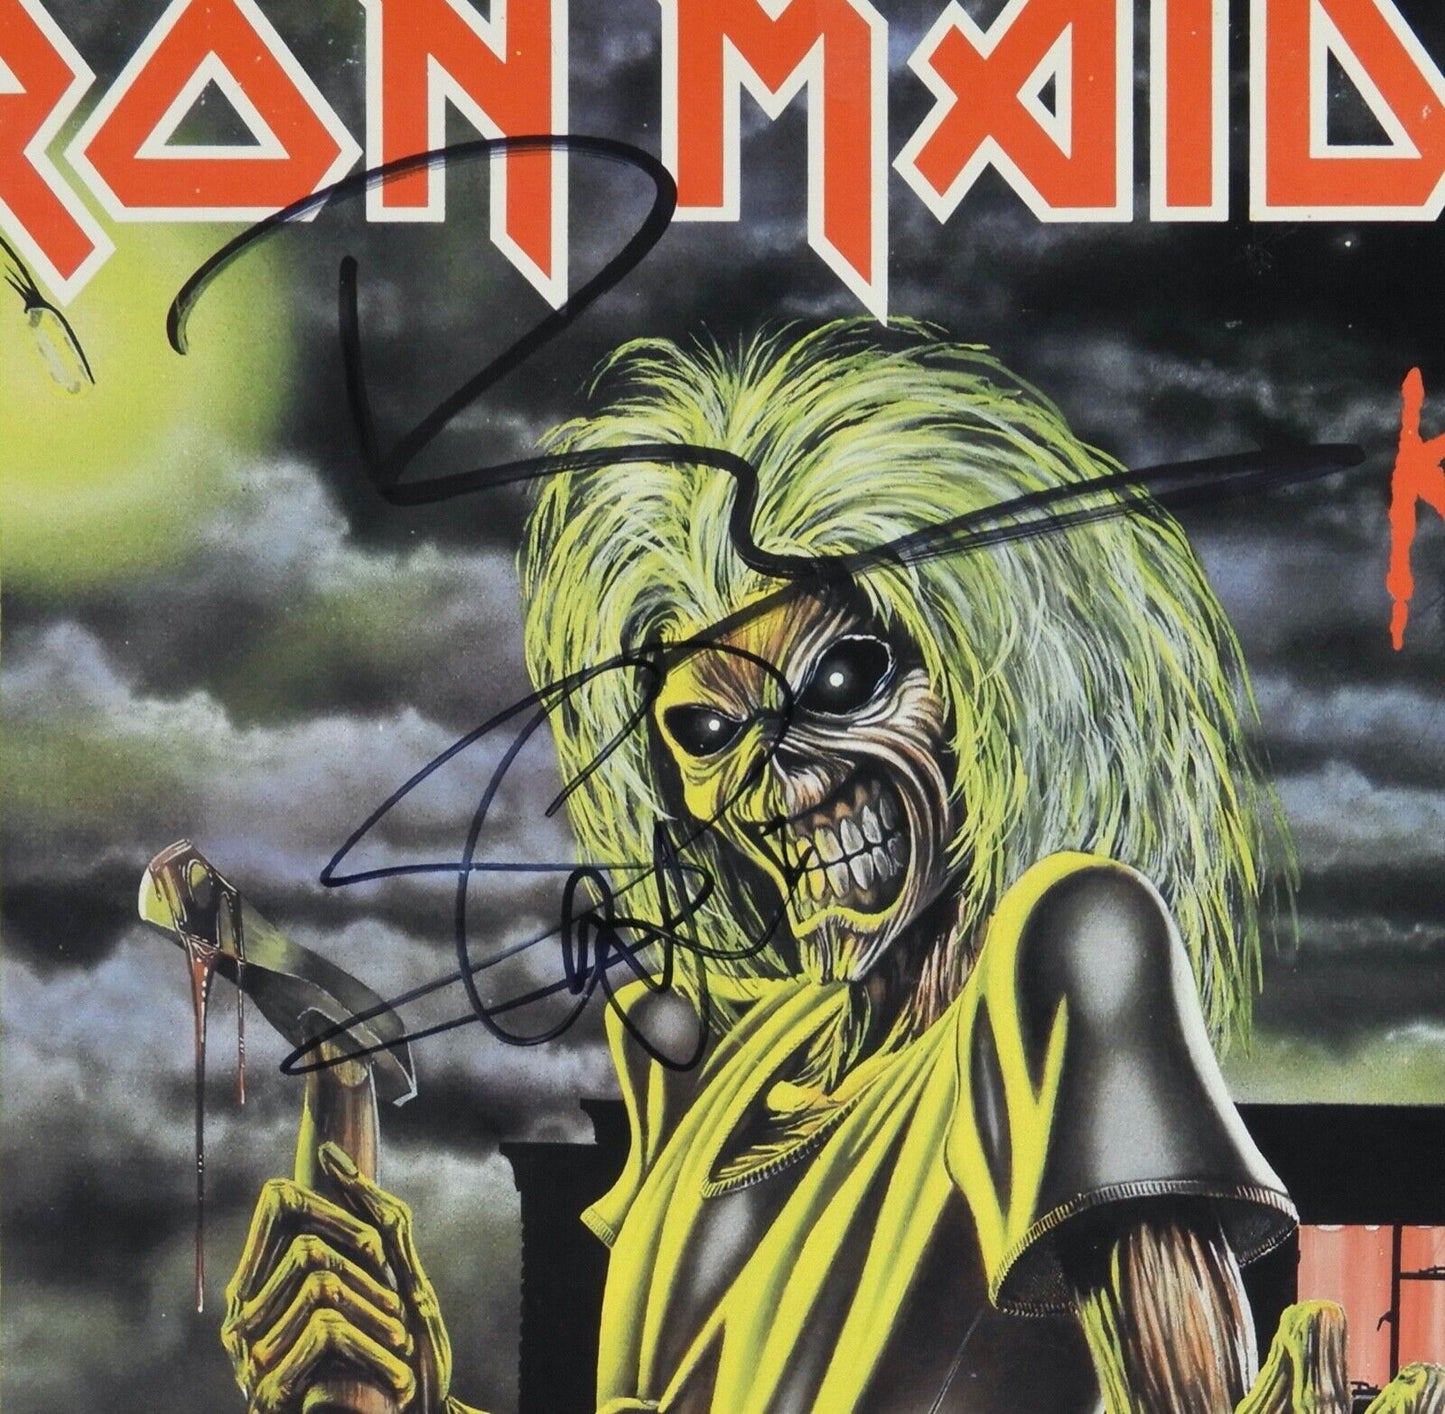 Iron Maiden JSA Signed Autograph Album Record Vinyl Killers Steve Harris